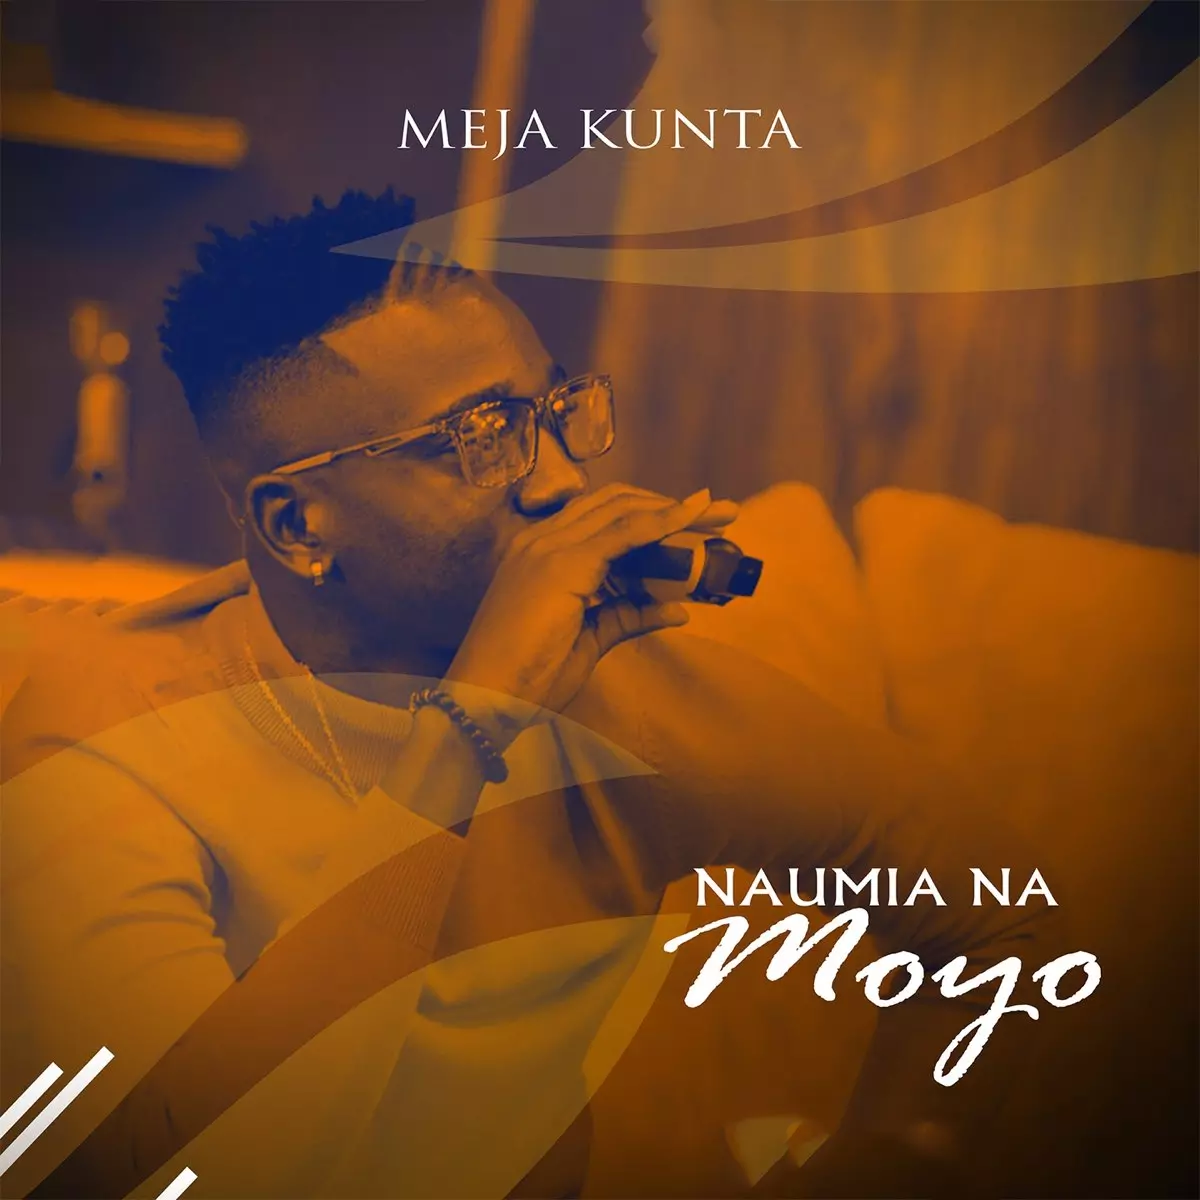 Naumia Moyo - Single by Meja Kunta on Apple Music